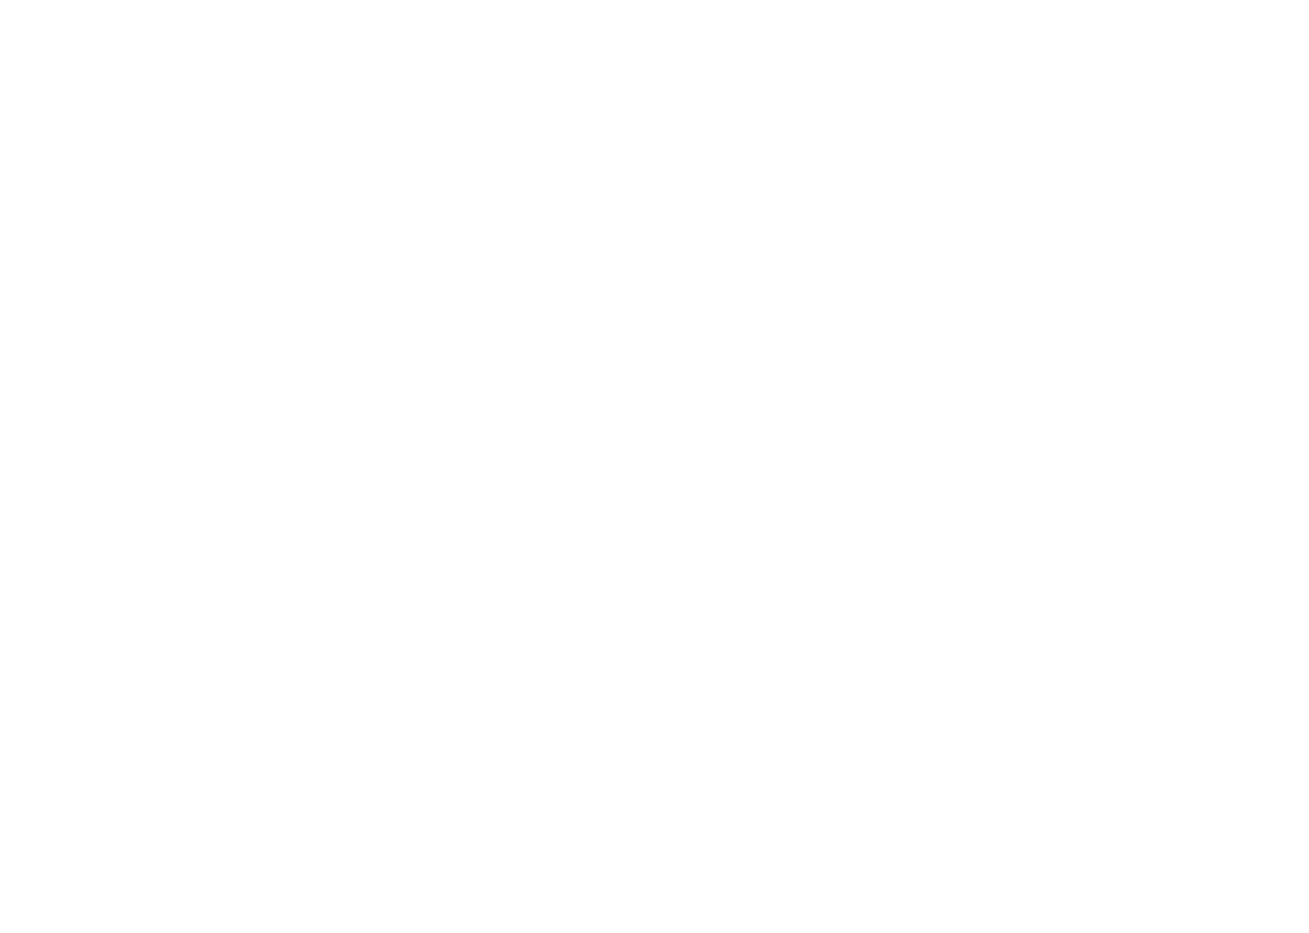 Cicloposse Bike Tours